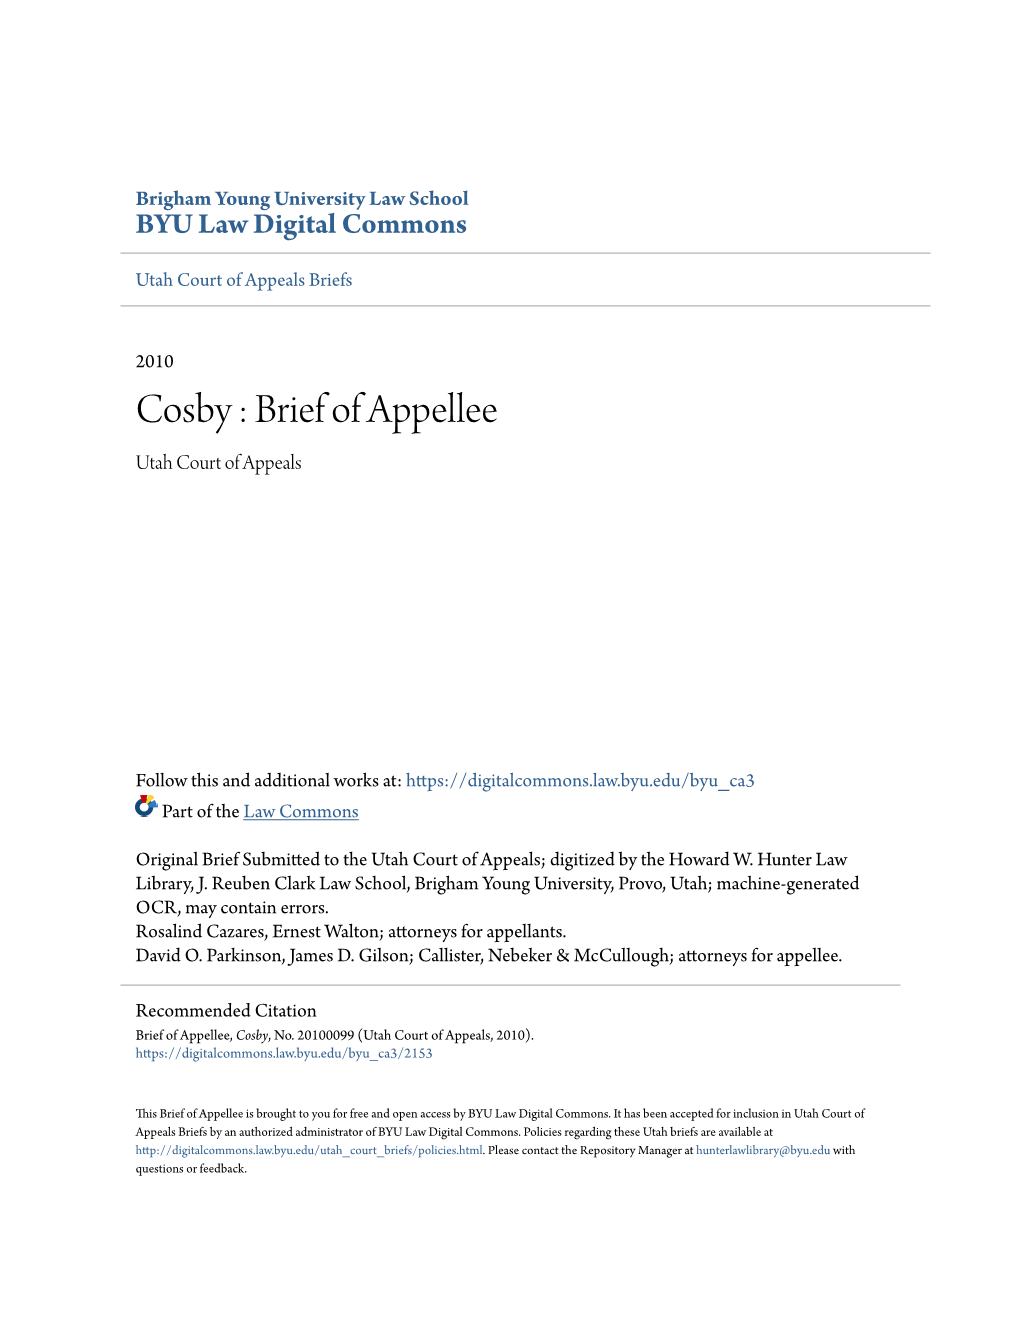 Cosby : Brief of Appellee Utah Court of Appeals